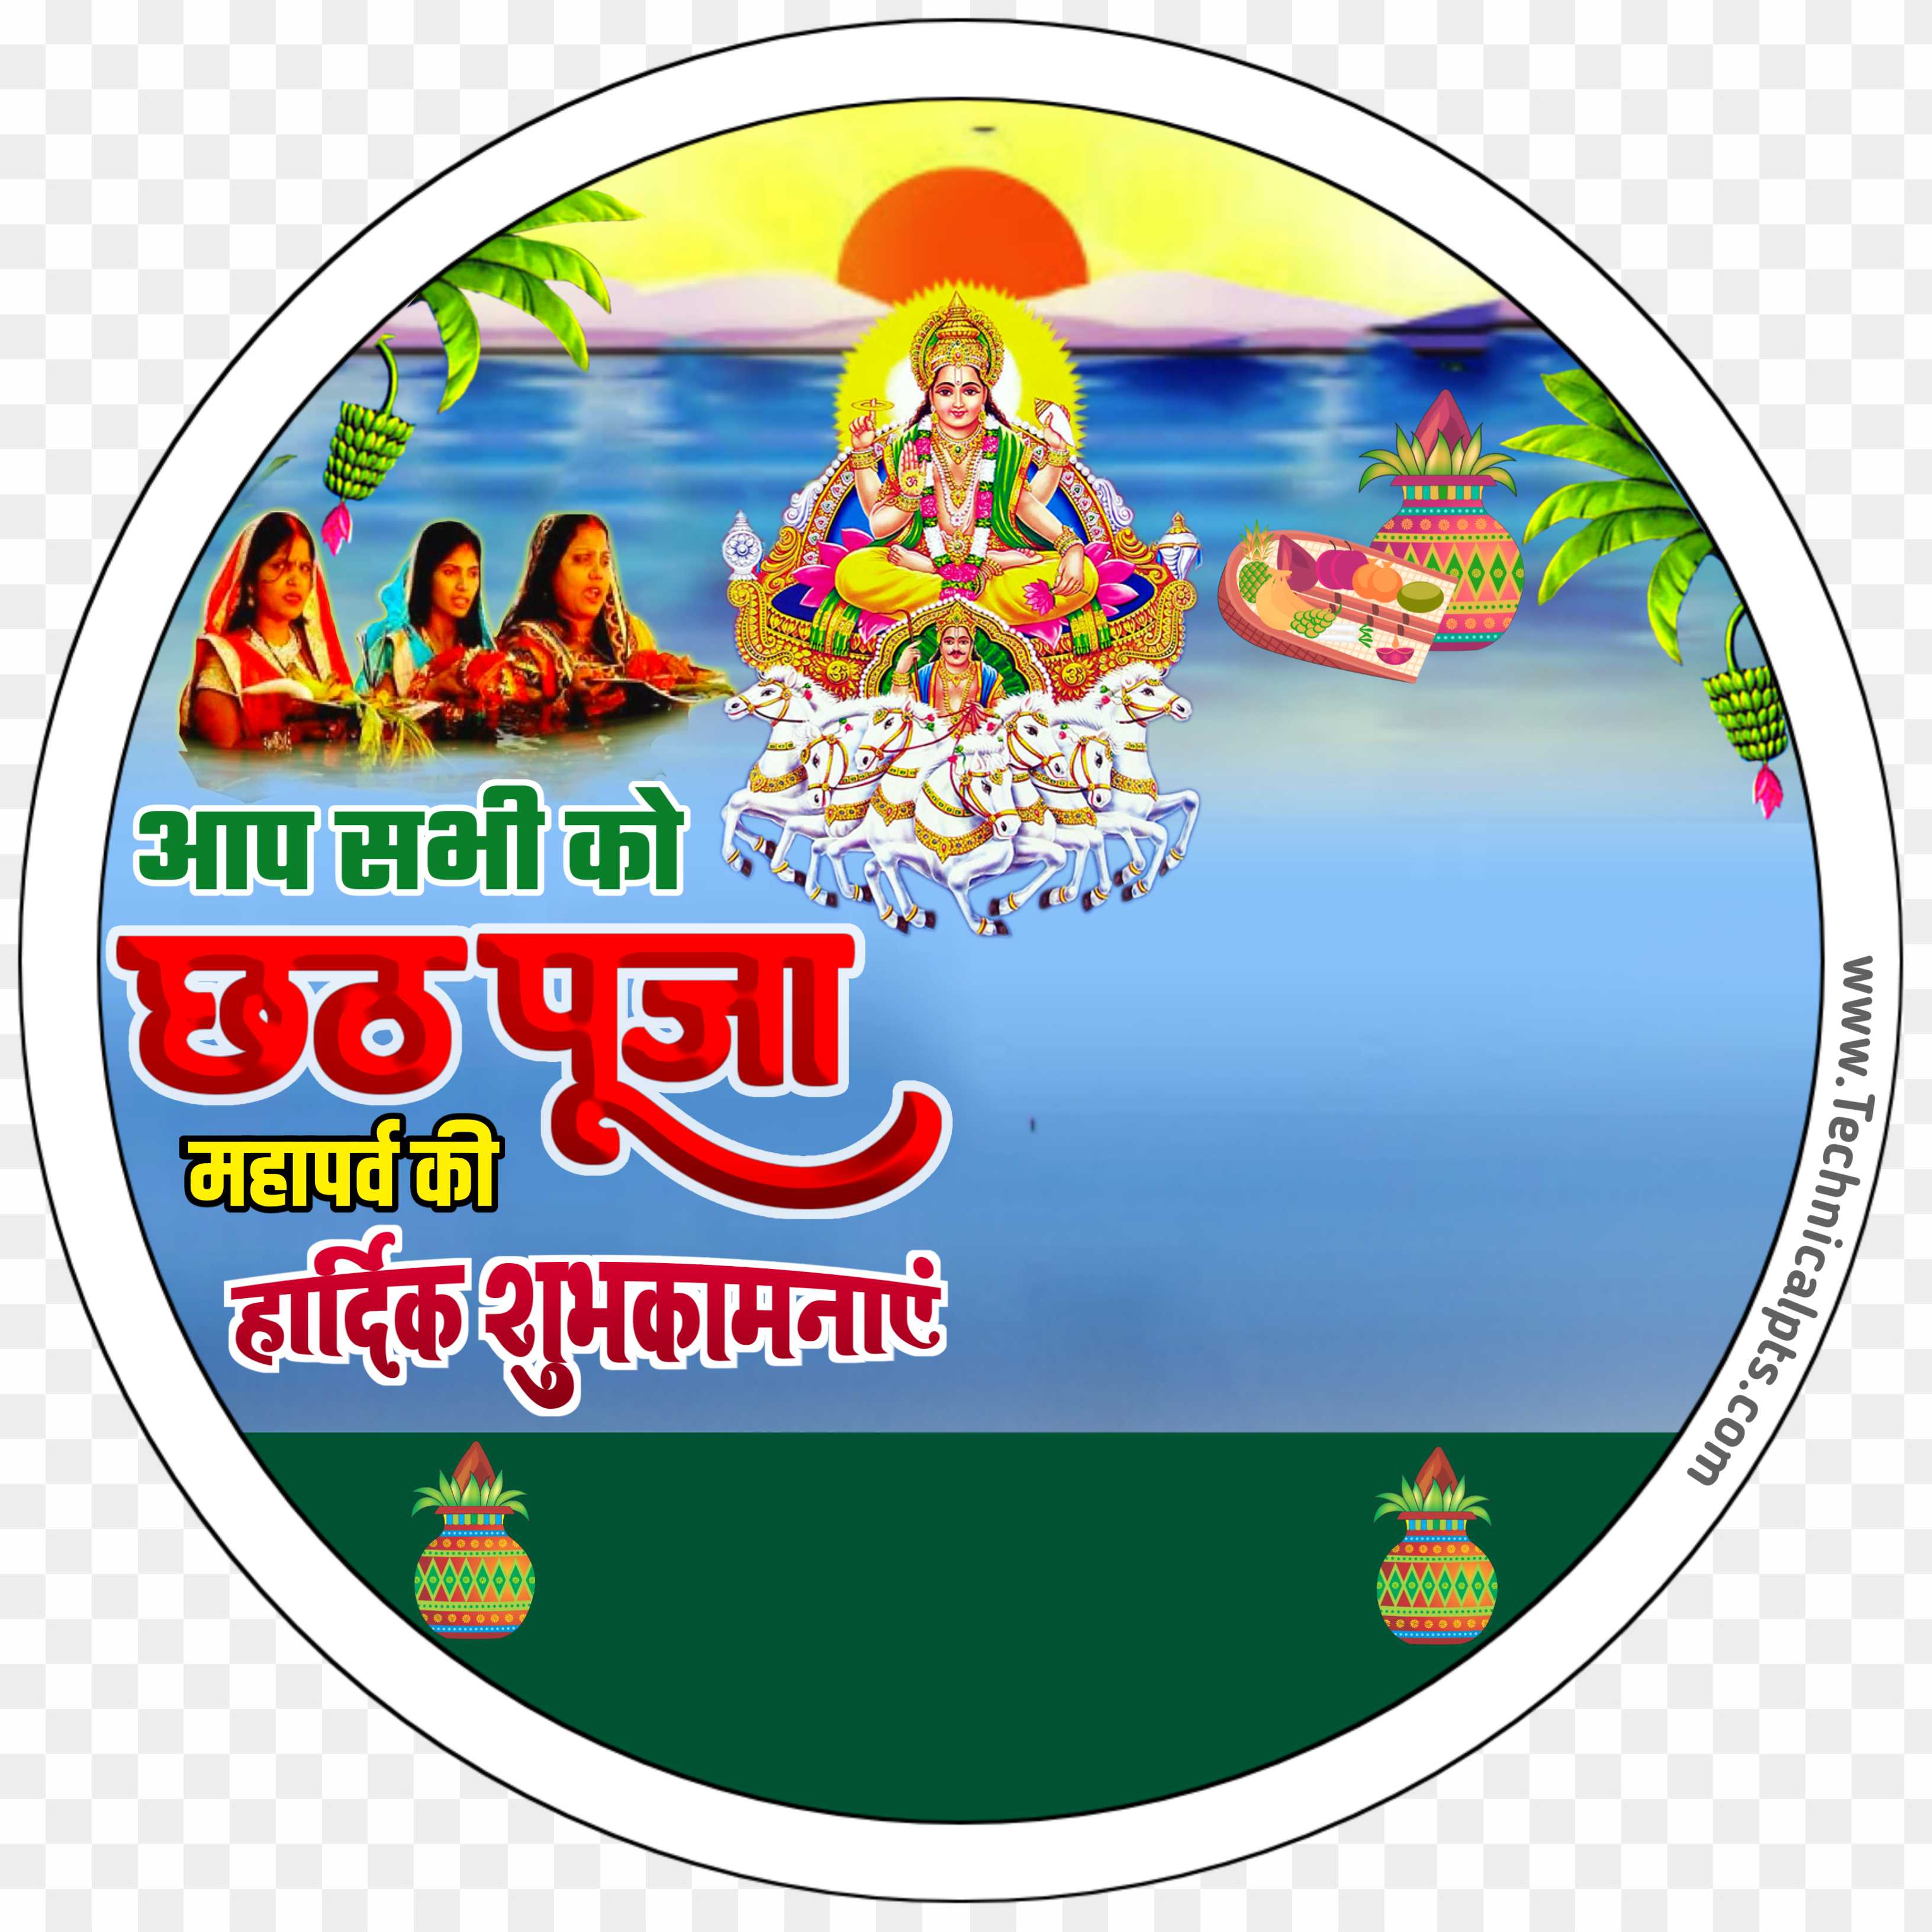 Chhath Puja DP logo PNG images download 